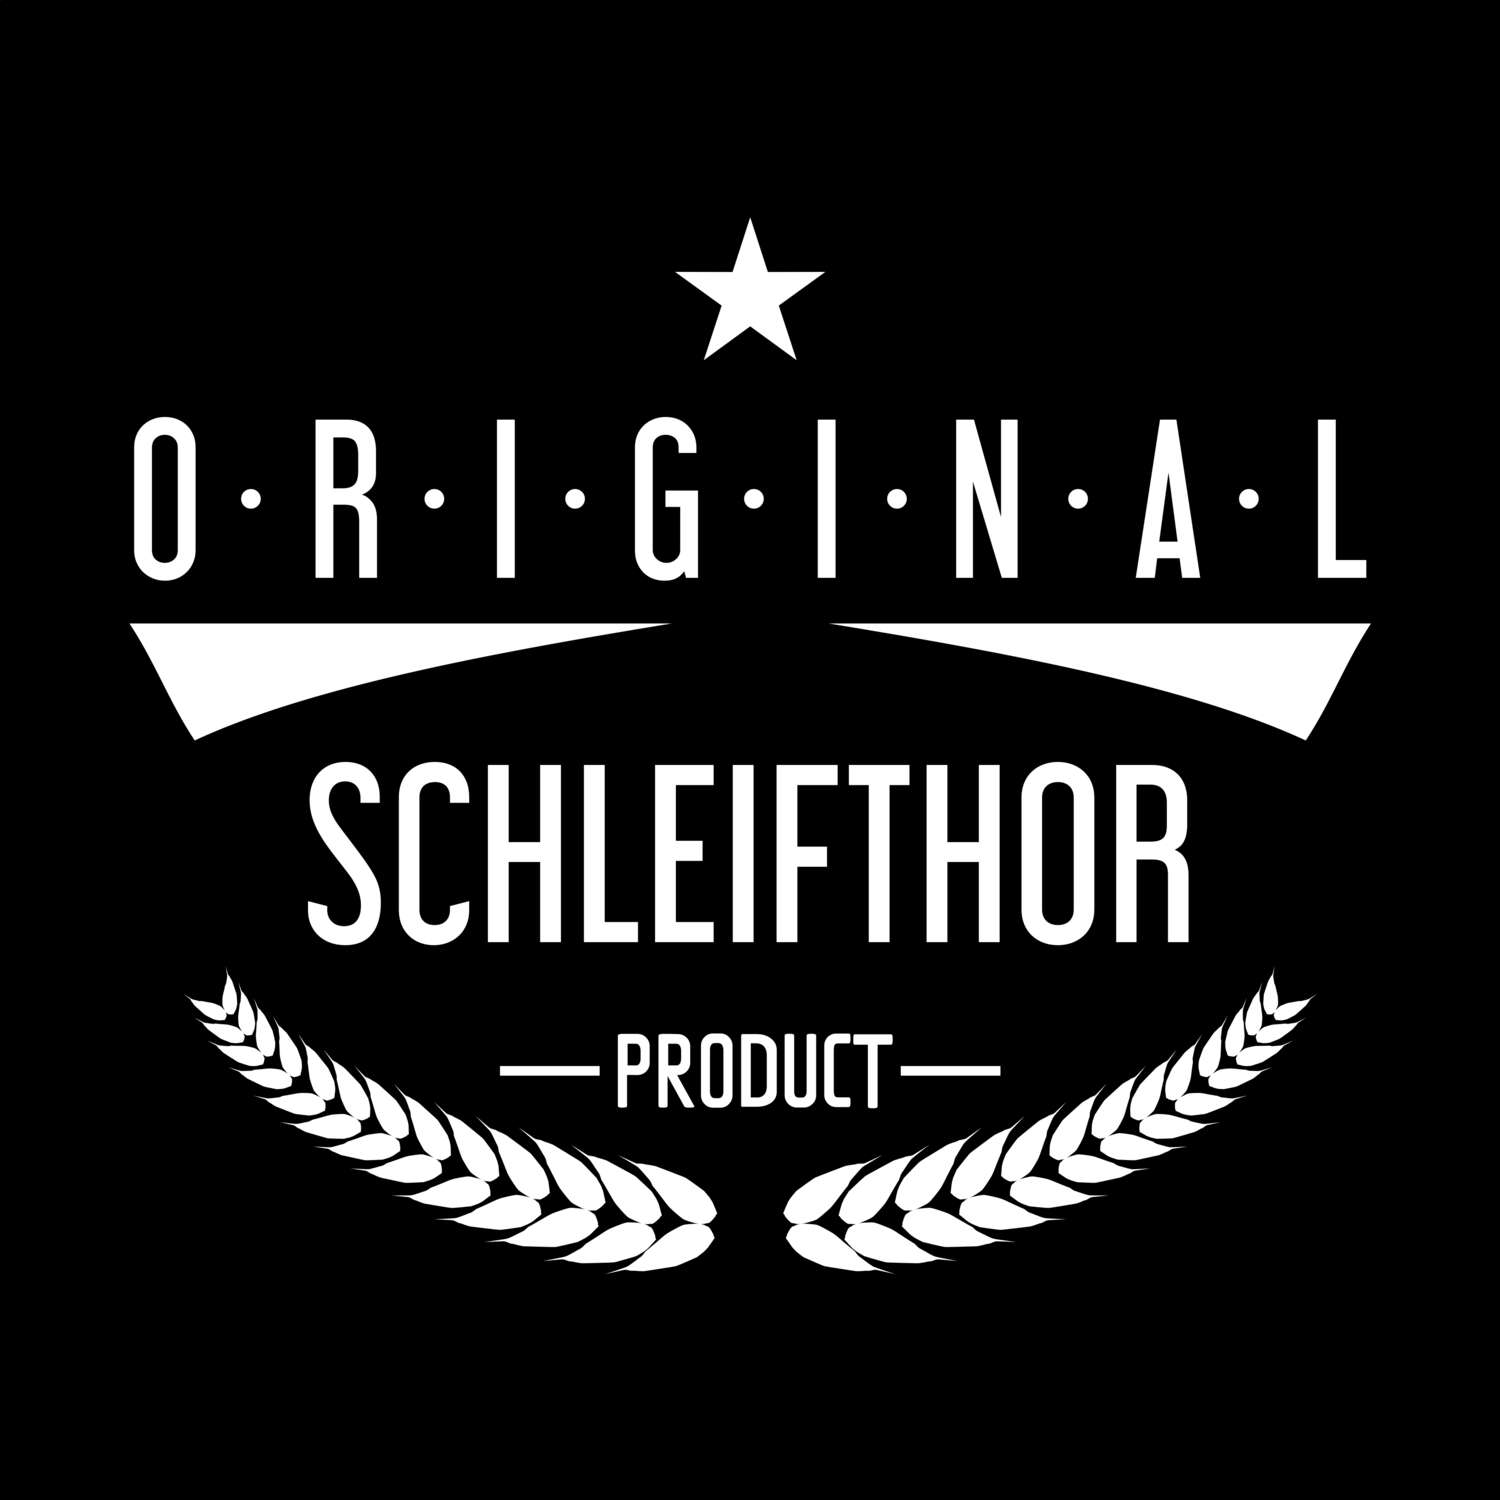 Schleifthor T-Shirt »Original Product«